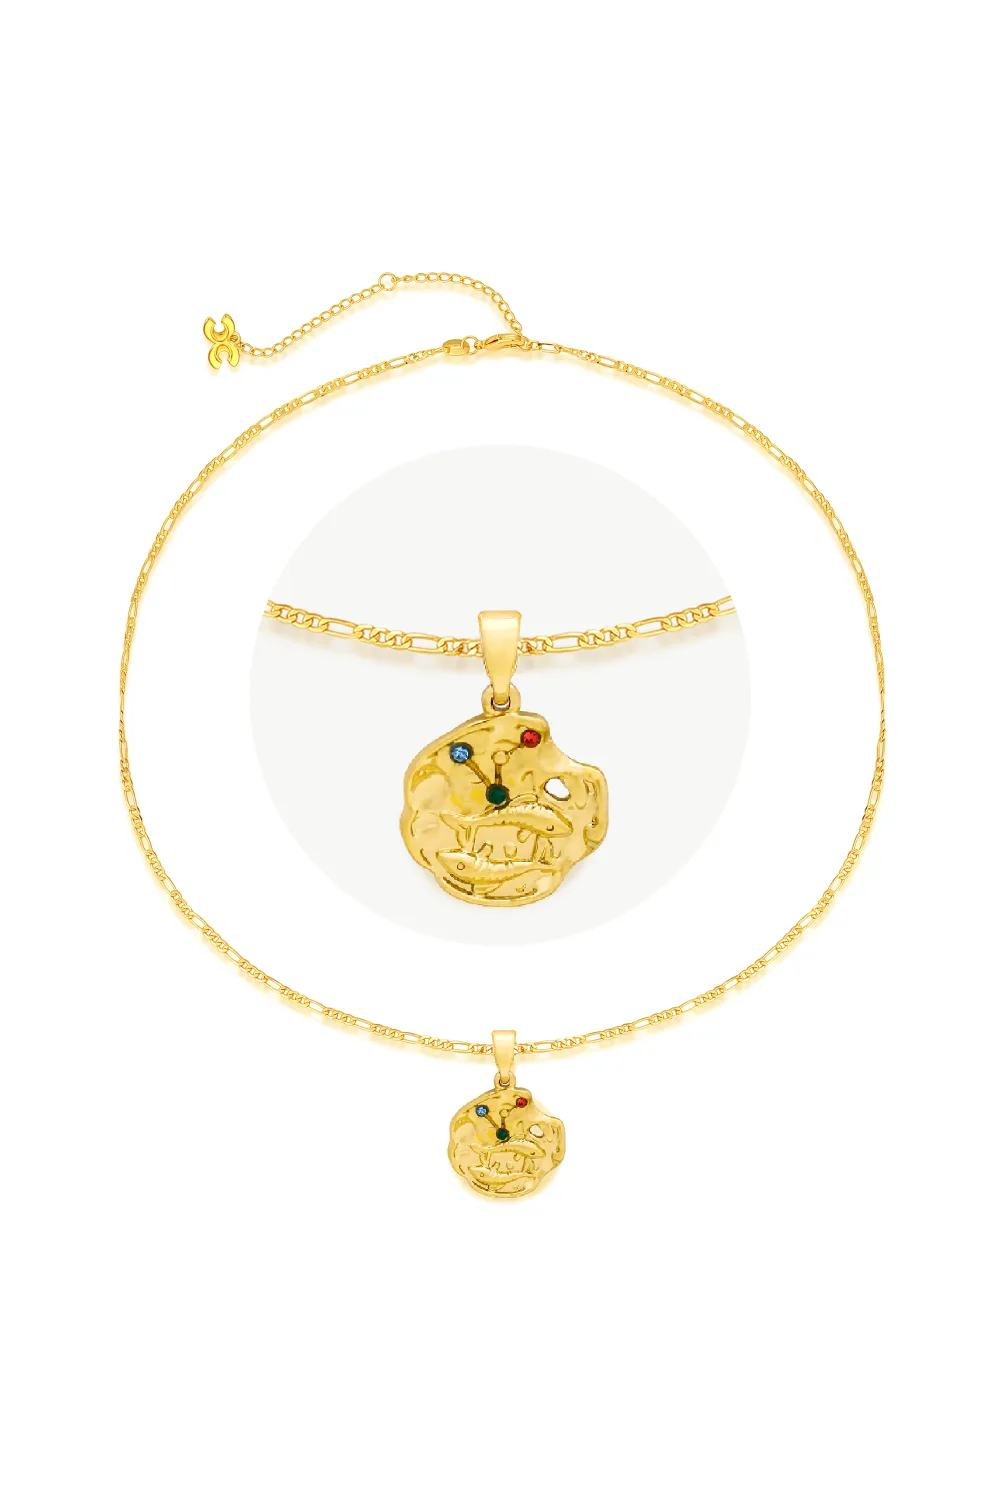 Classicharms-Gold Sculptural Horoscope Zodiac Sign Pendant Necklace Set-Pisces